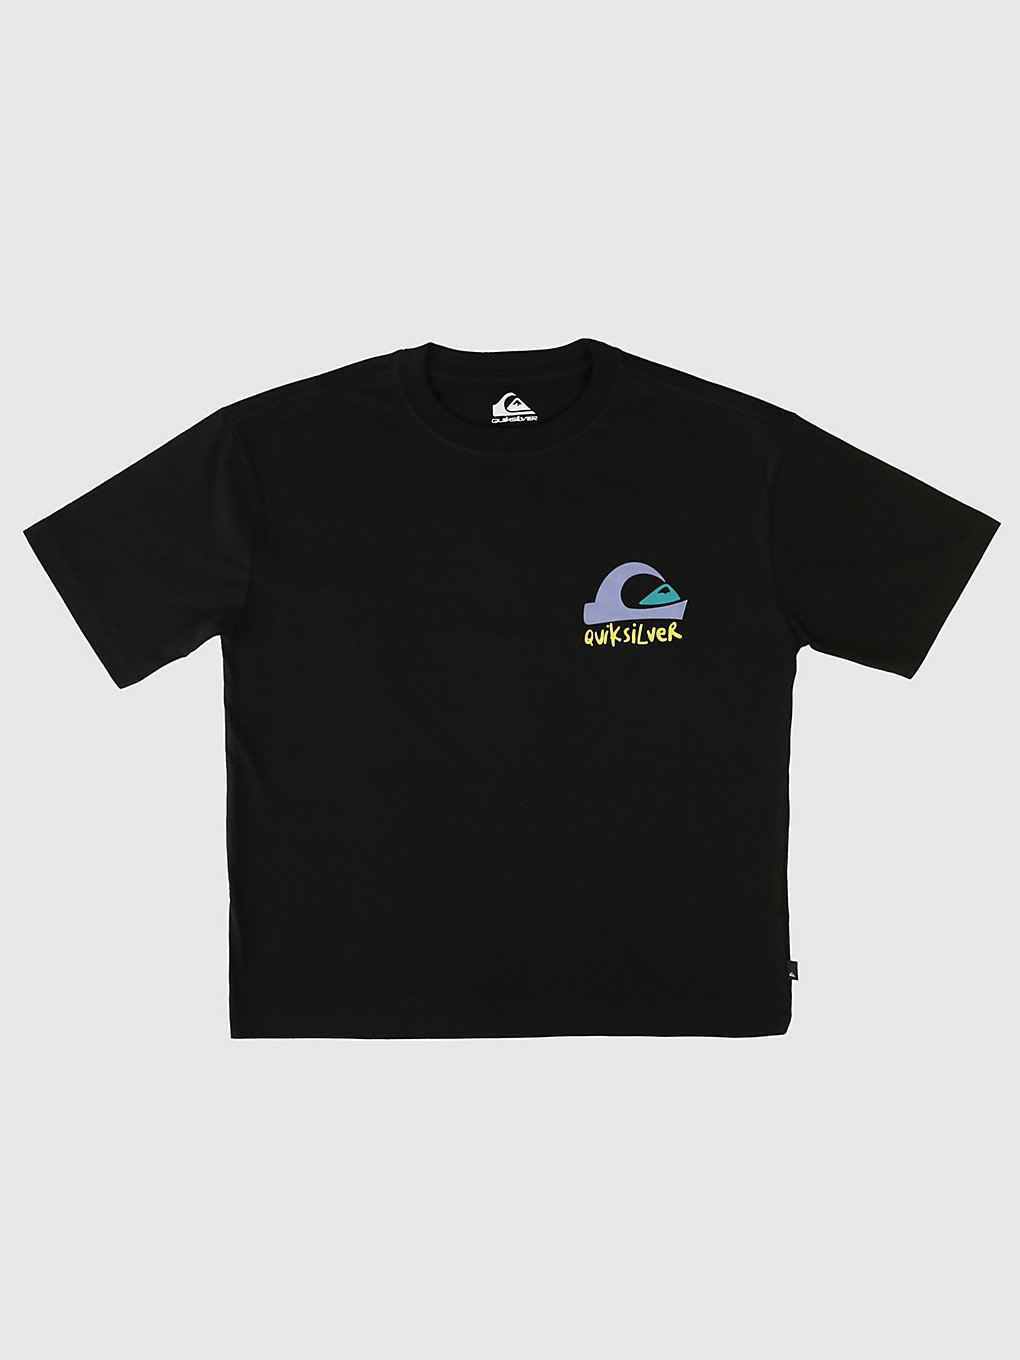 Quiksilver Radical Times 2 T-Shirt black kaufen